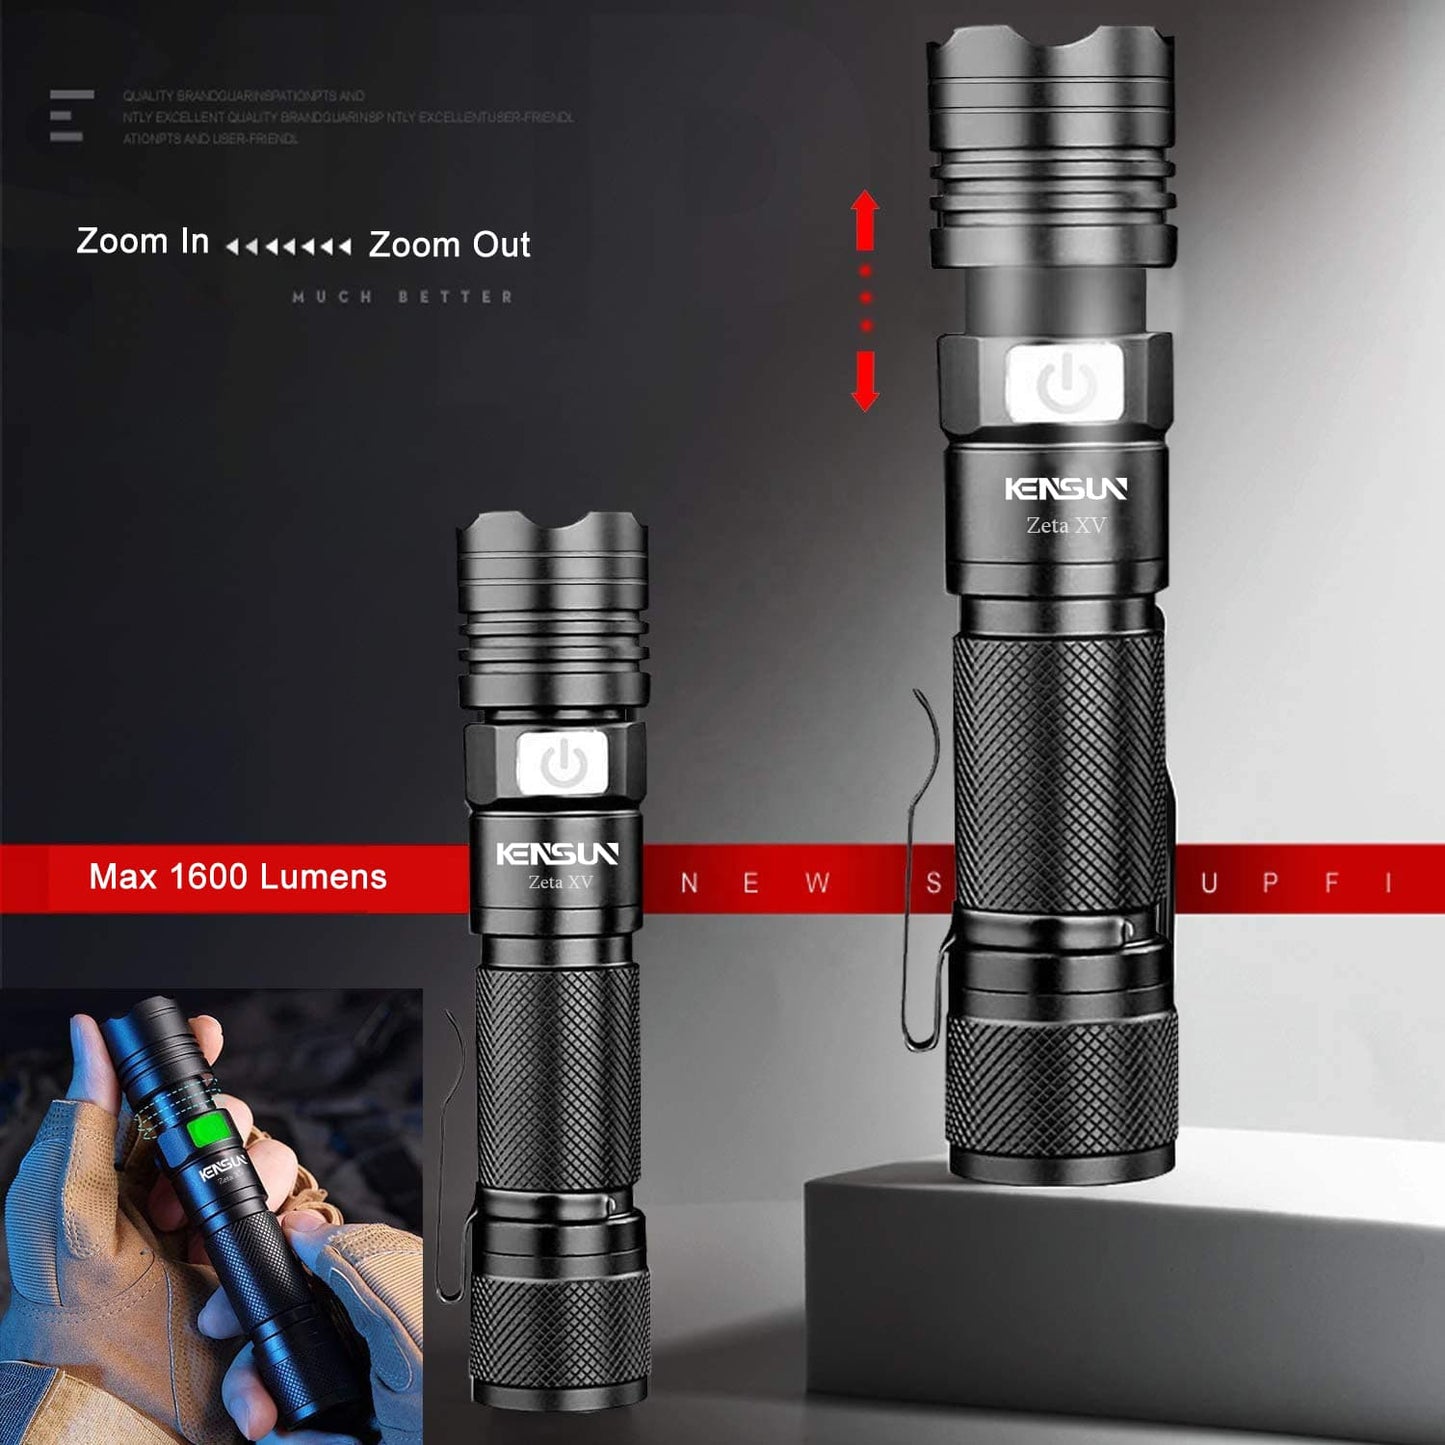 Zeta XV | Convenient Powerful Zoomable 1600 lumens Flashlight